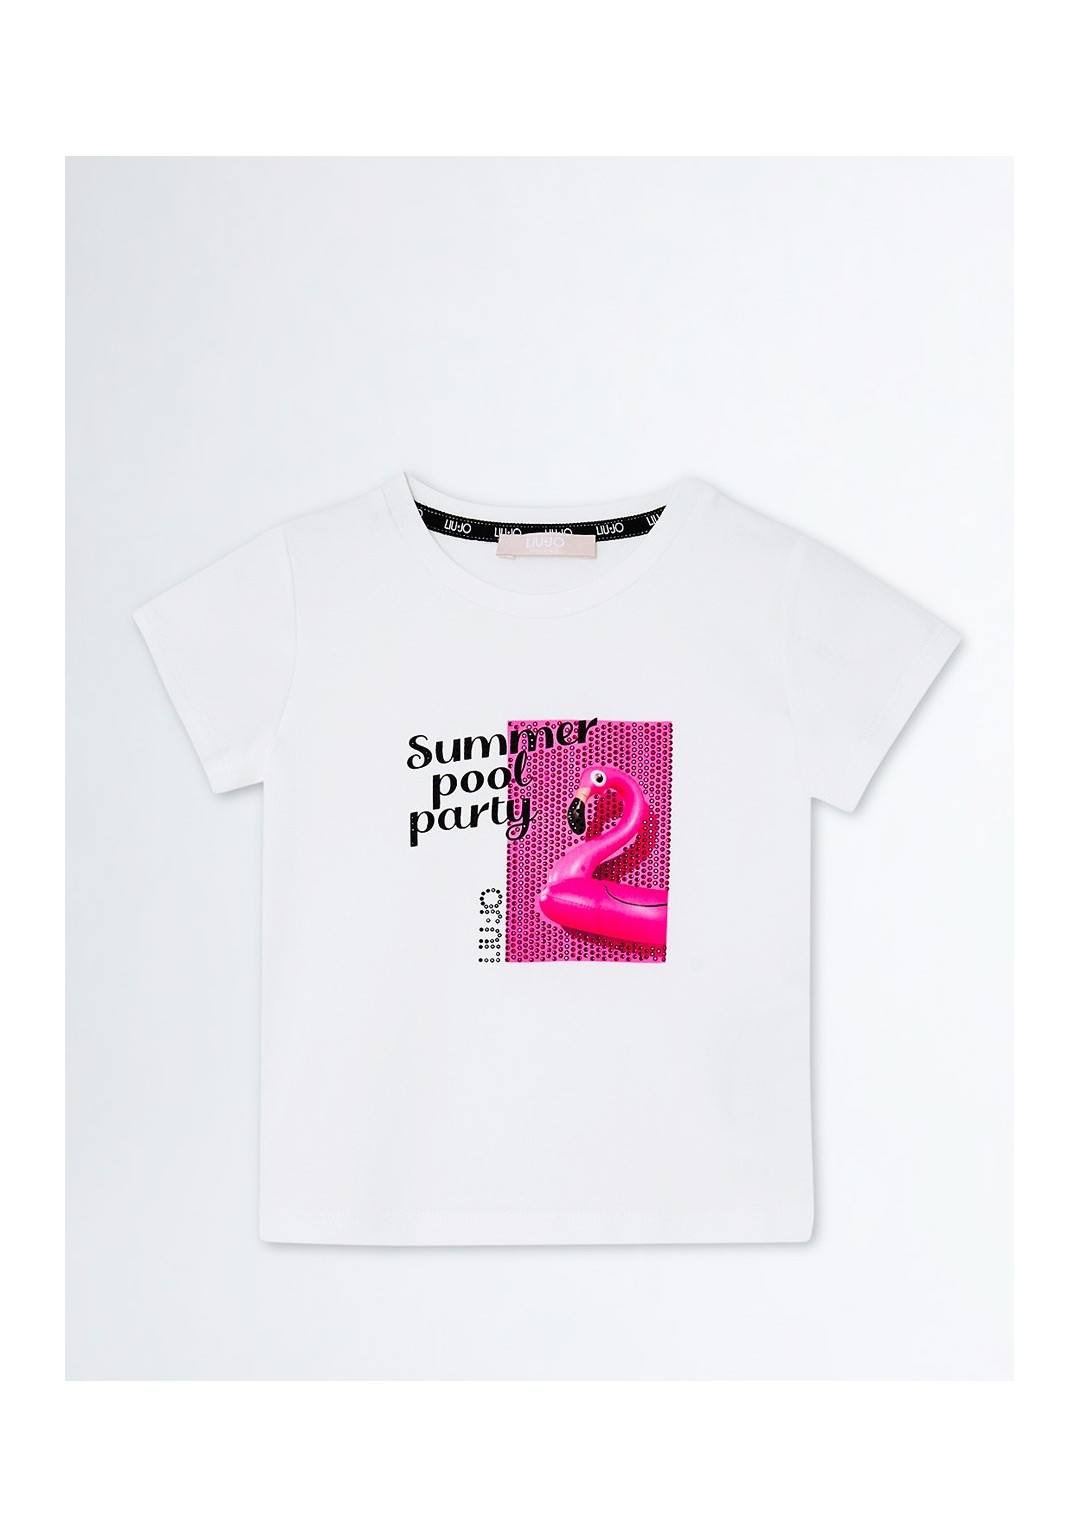 LIU JO - T-shirt Fenicottero - Bambine e ragazze - KA3148  J5003